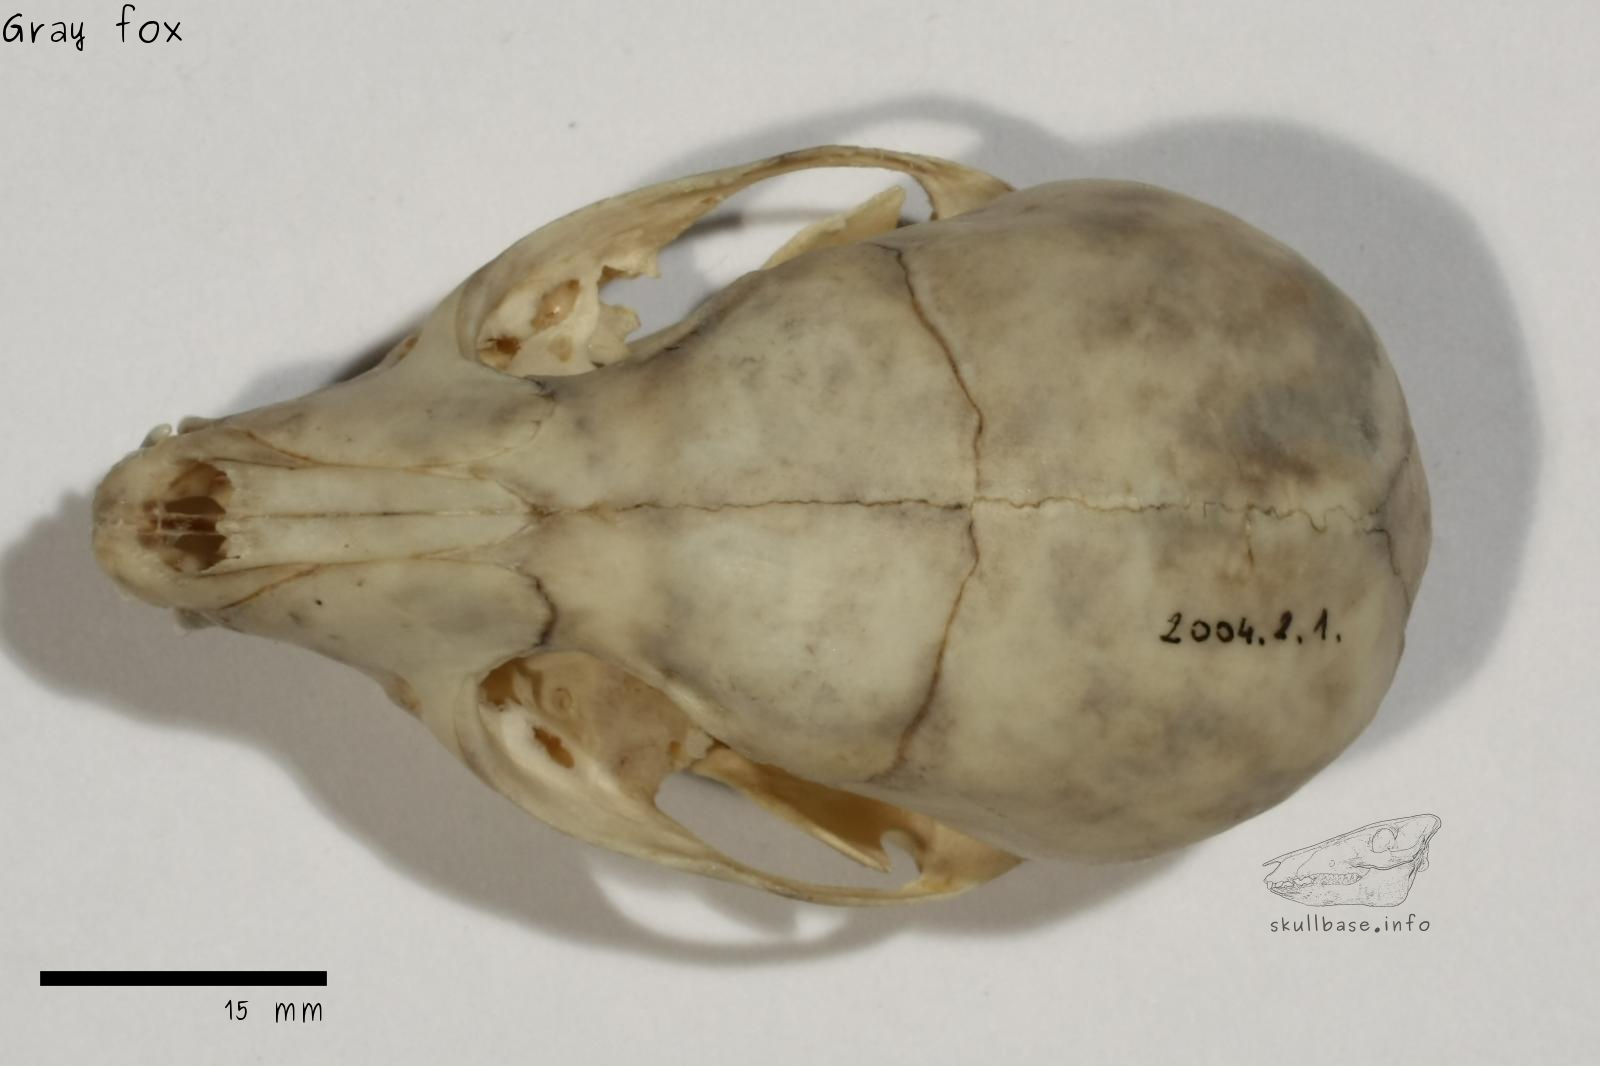 Gray fox (Urocyon cinereoargenteus) skull dorsal view